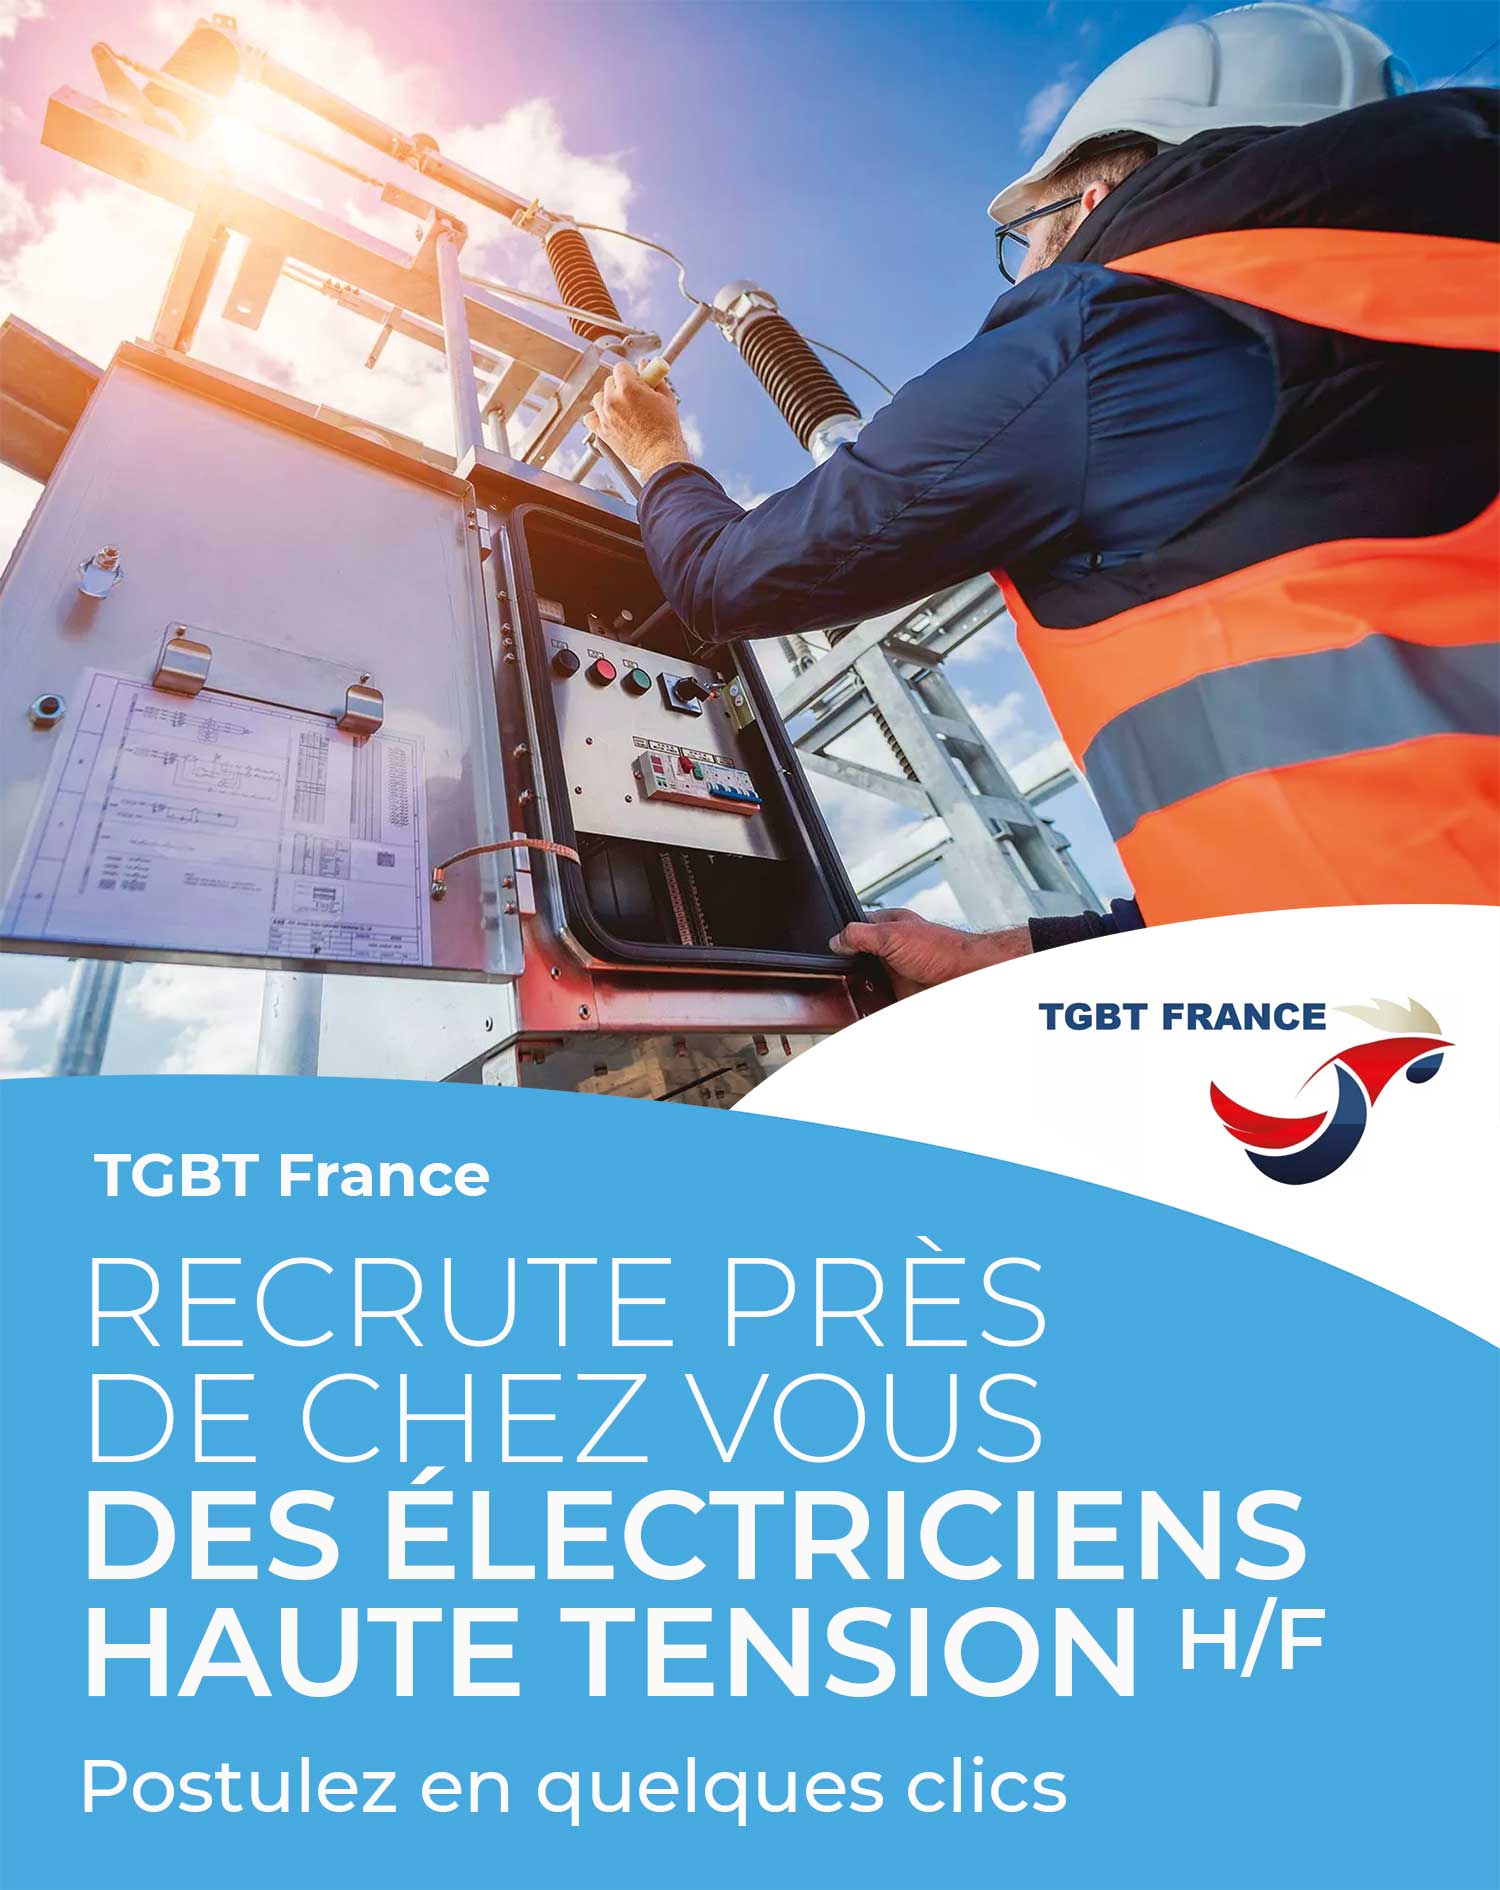 TGBT France recrute